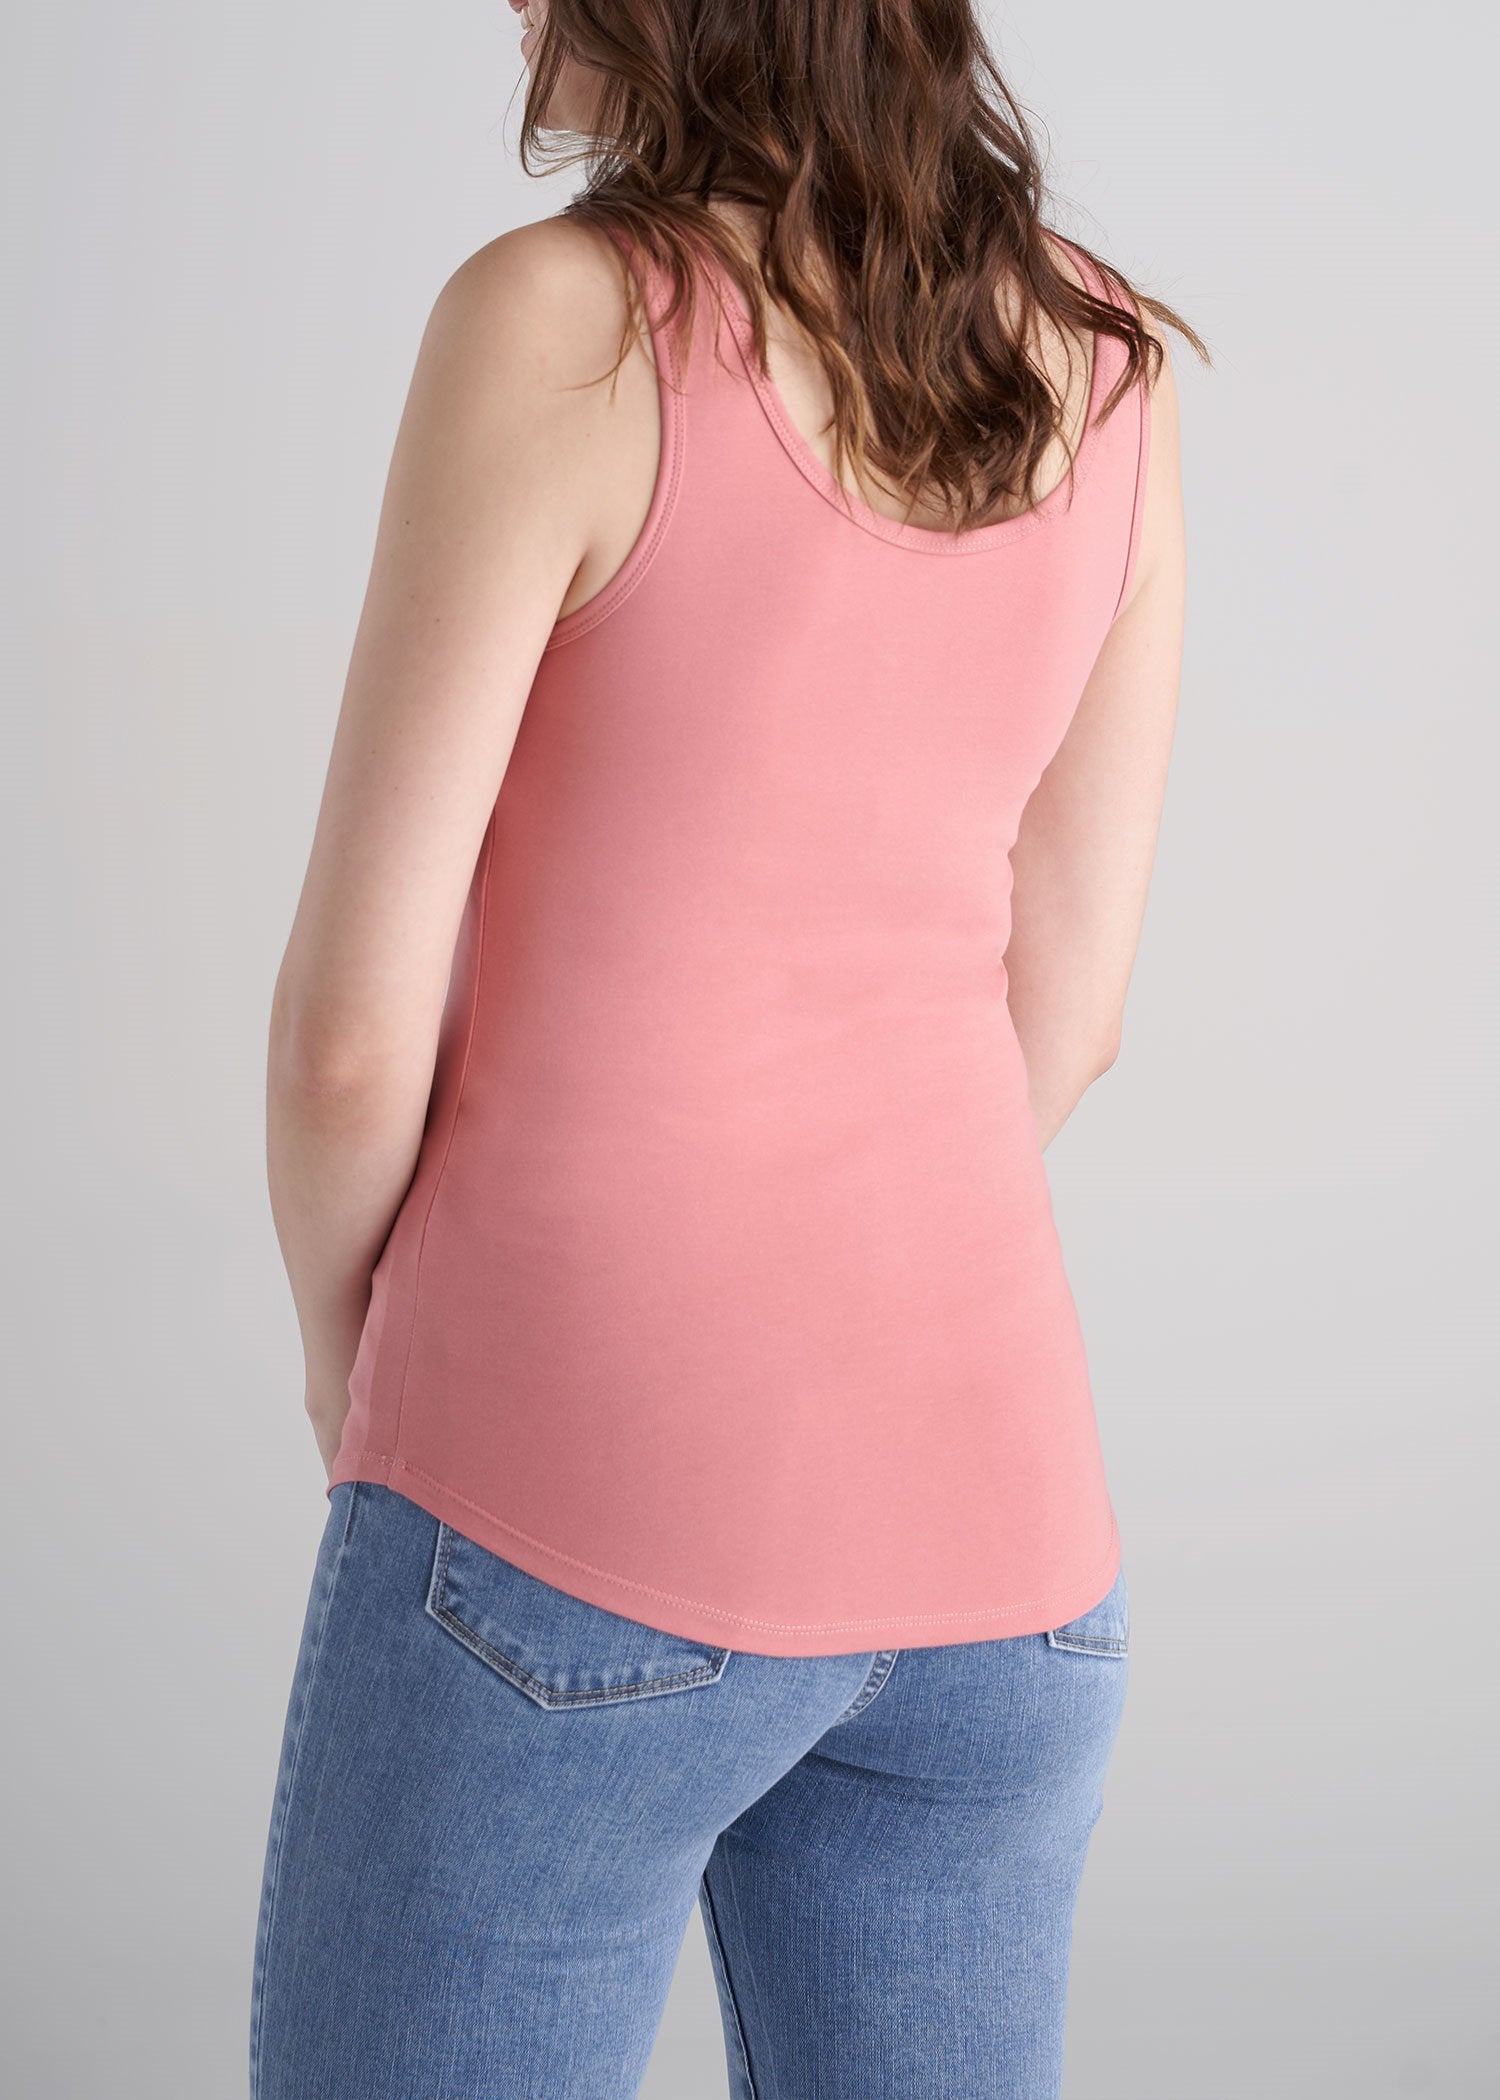 Women's Shirts & Tops - Pink, Tank Tops